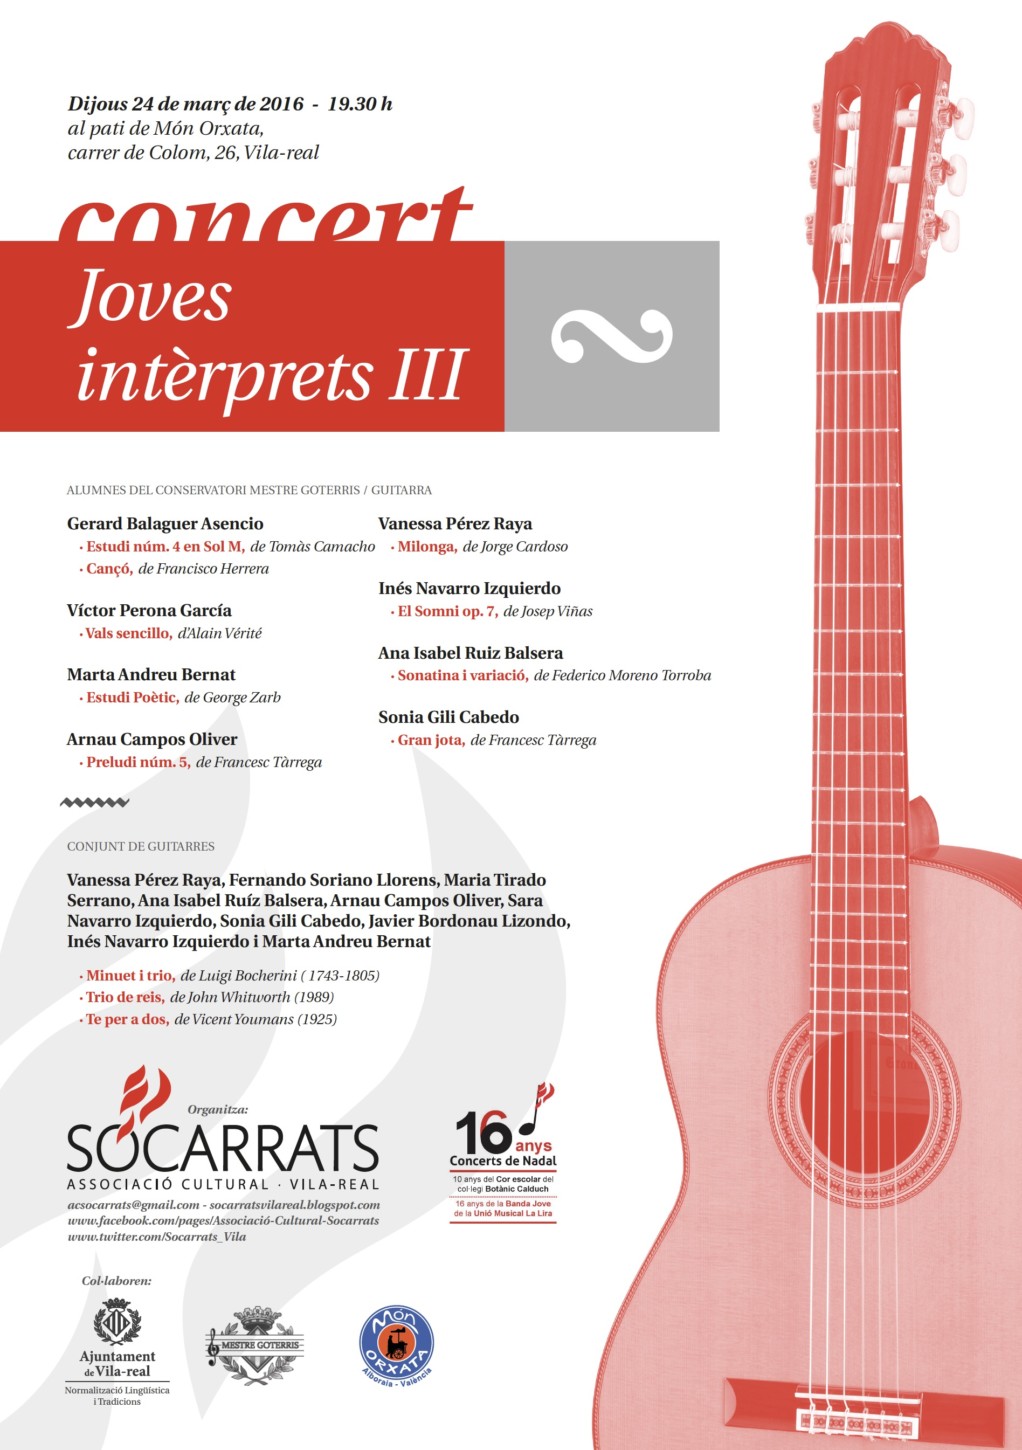 Concert de Joves Intèprets III